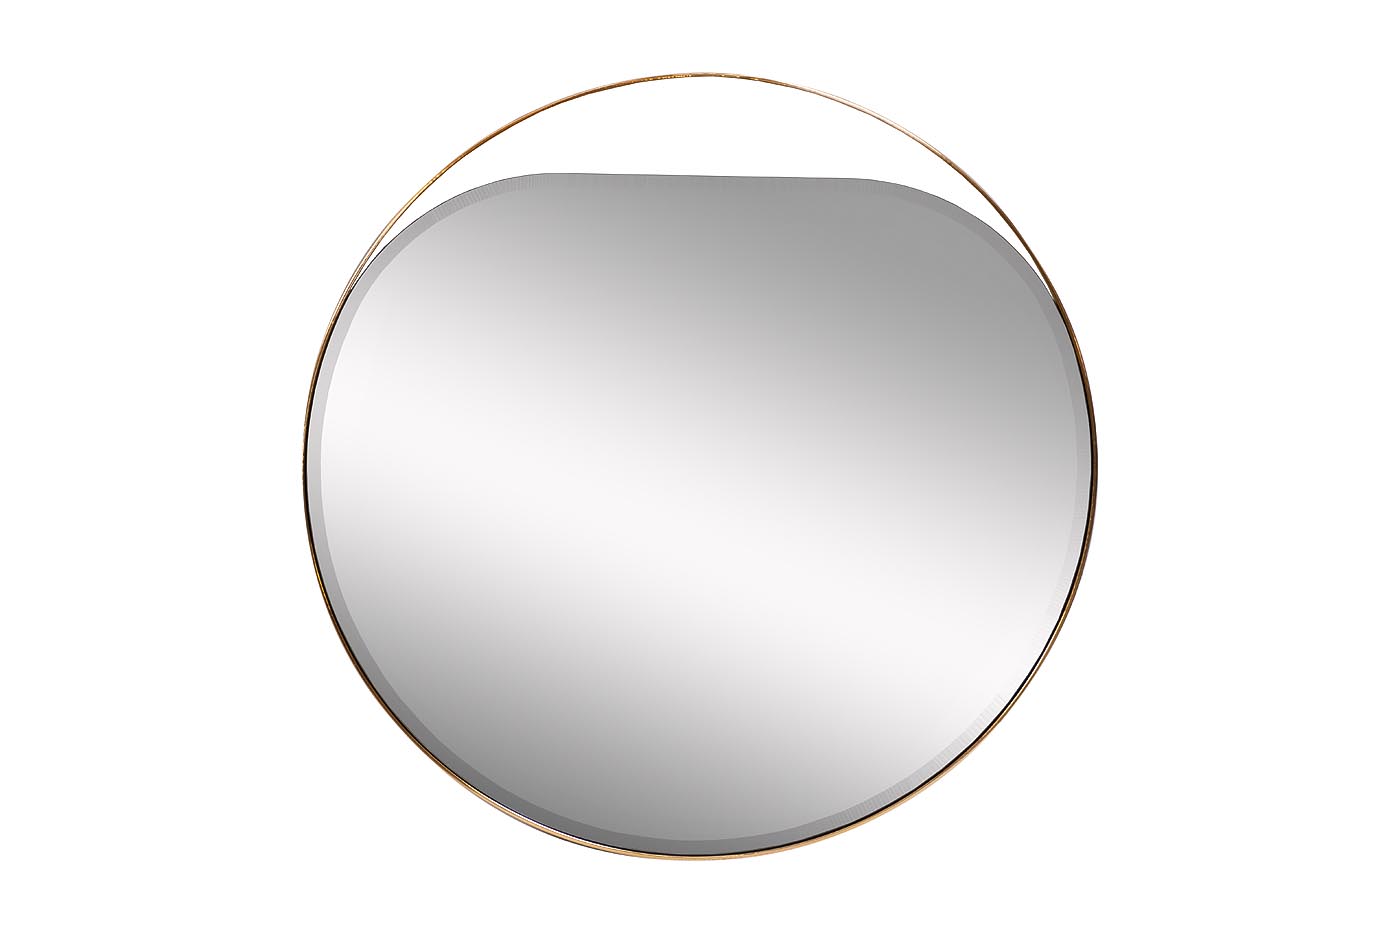 KFE1240 Зеркало круглое  в металлической раме, цвет золото